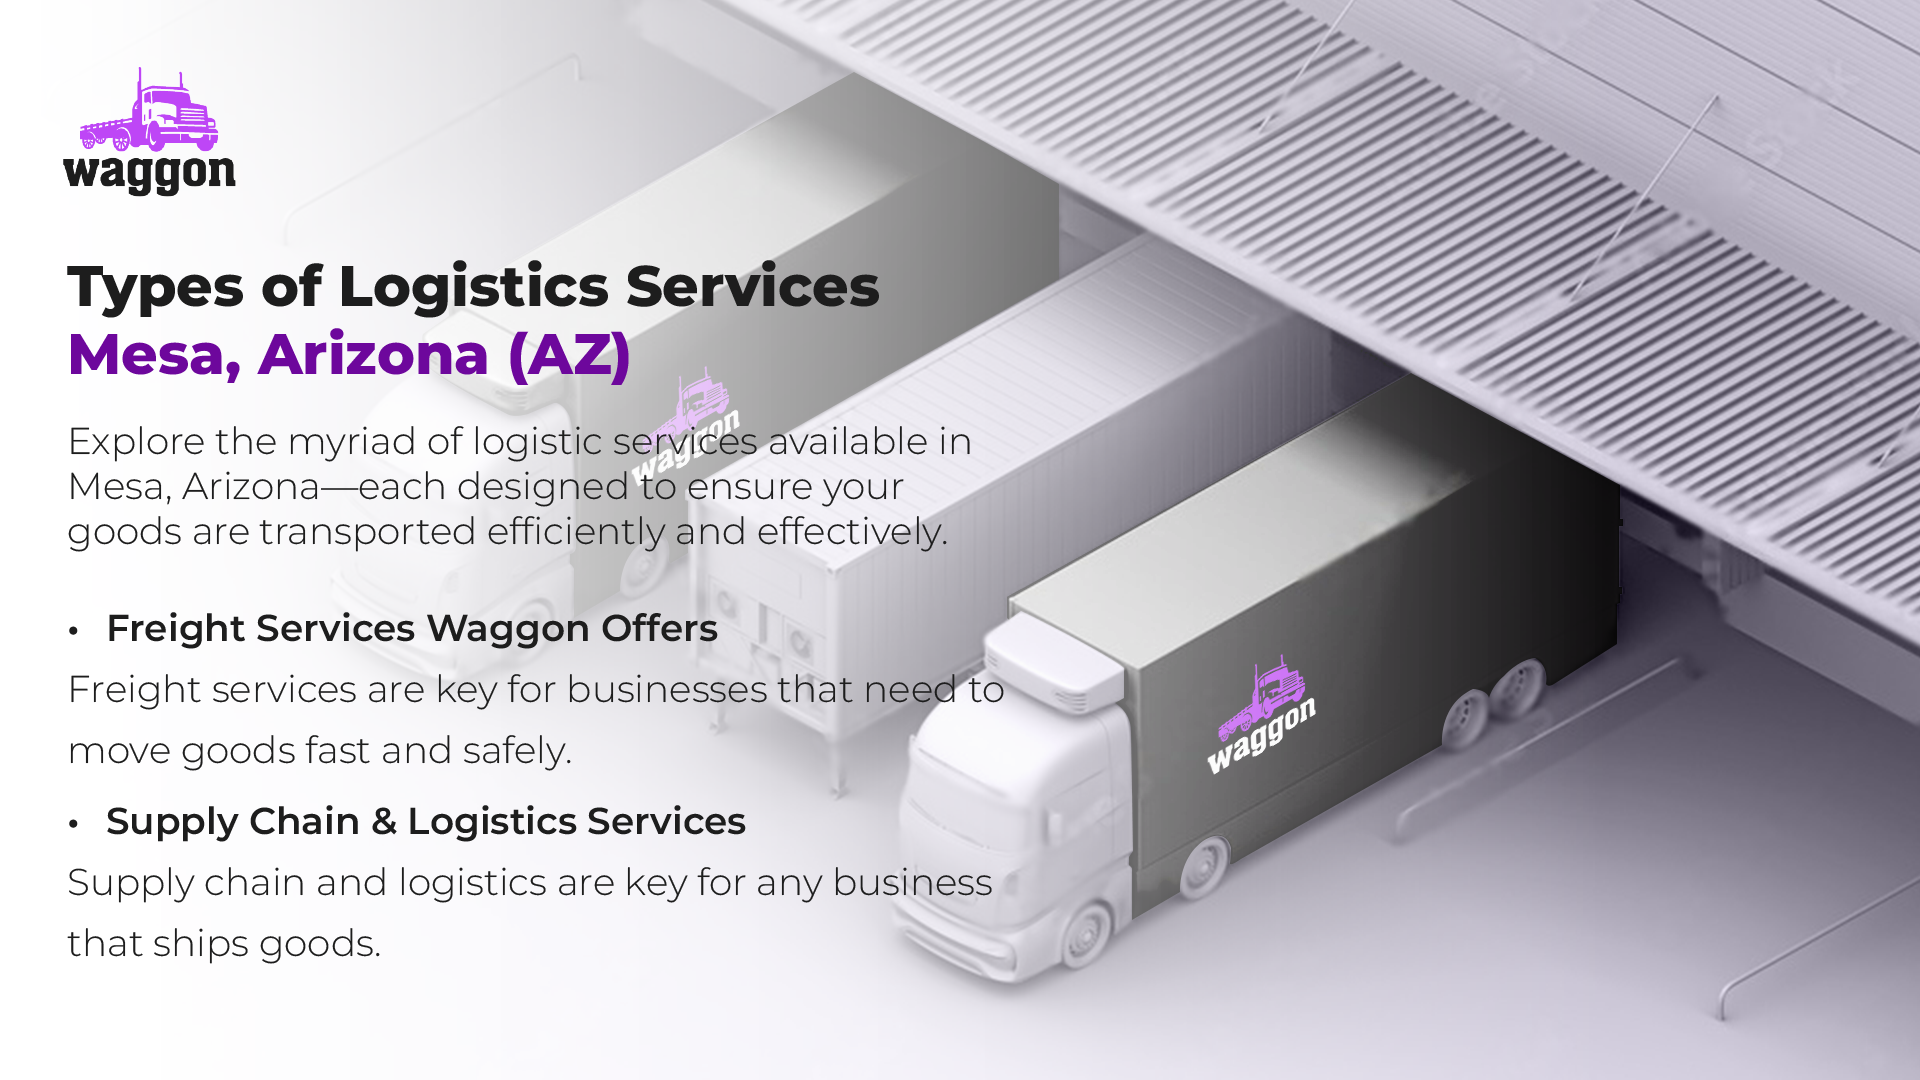 Types of Logistics Services in Mesa, Arizona (AZ)